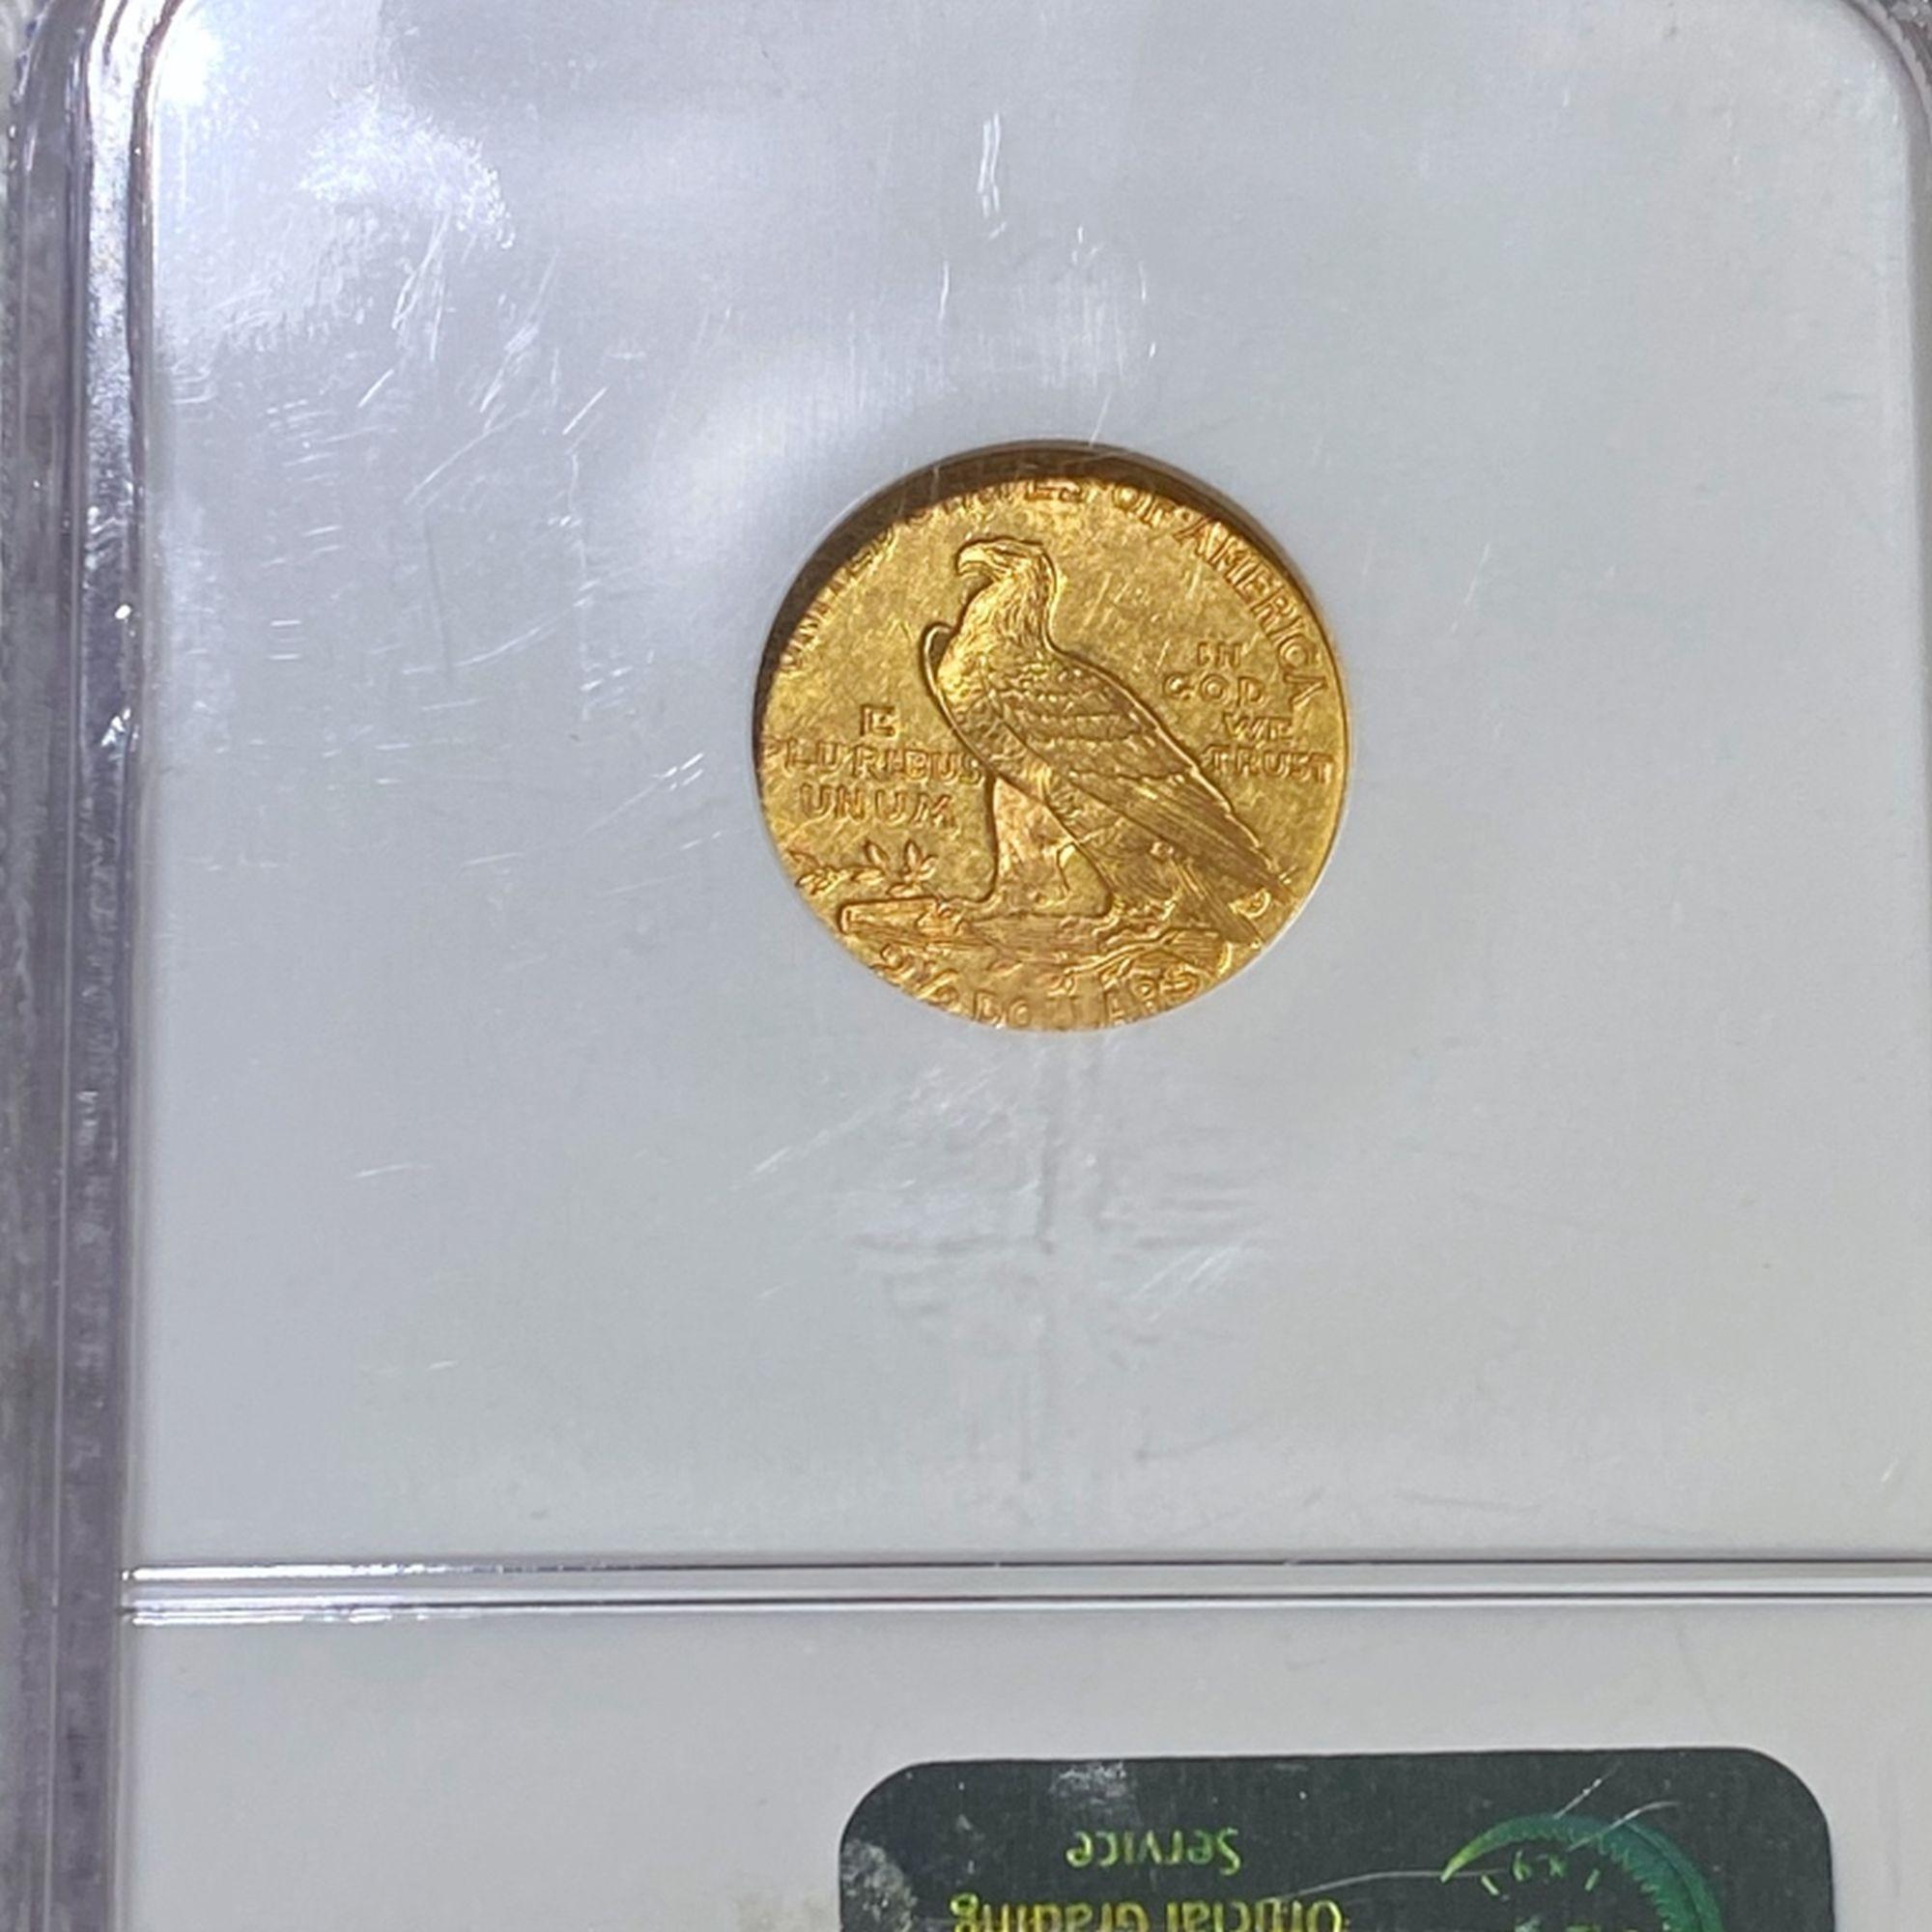 1926 $2.50 Gold Quarter Eagle NGC - MS61